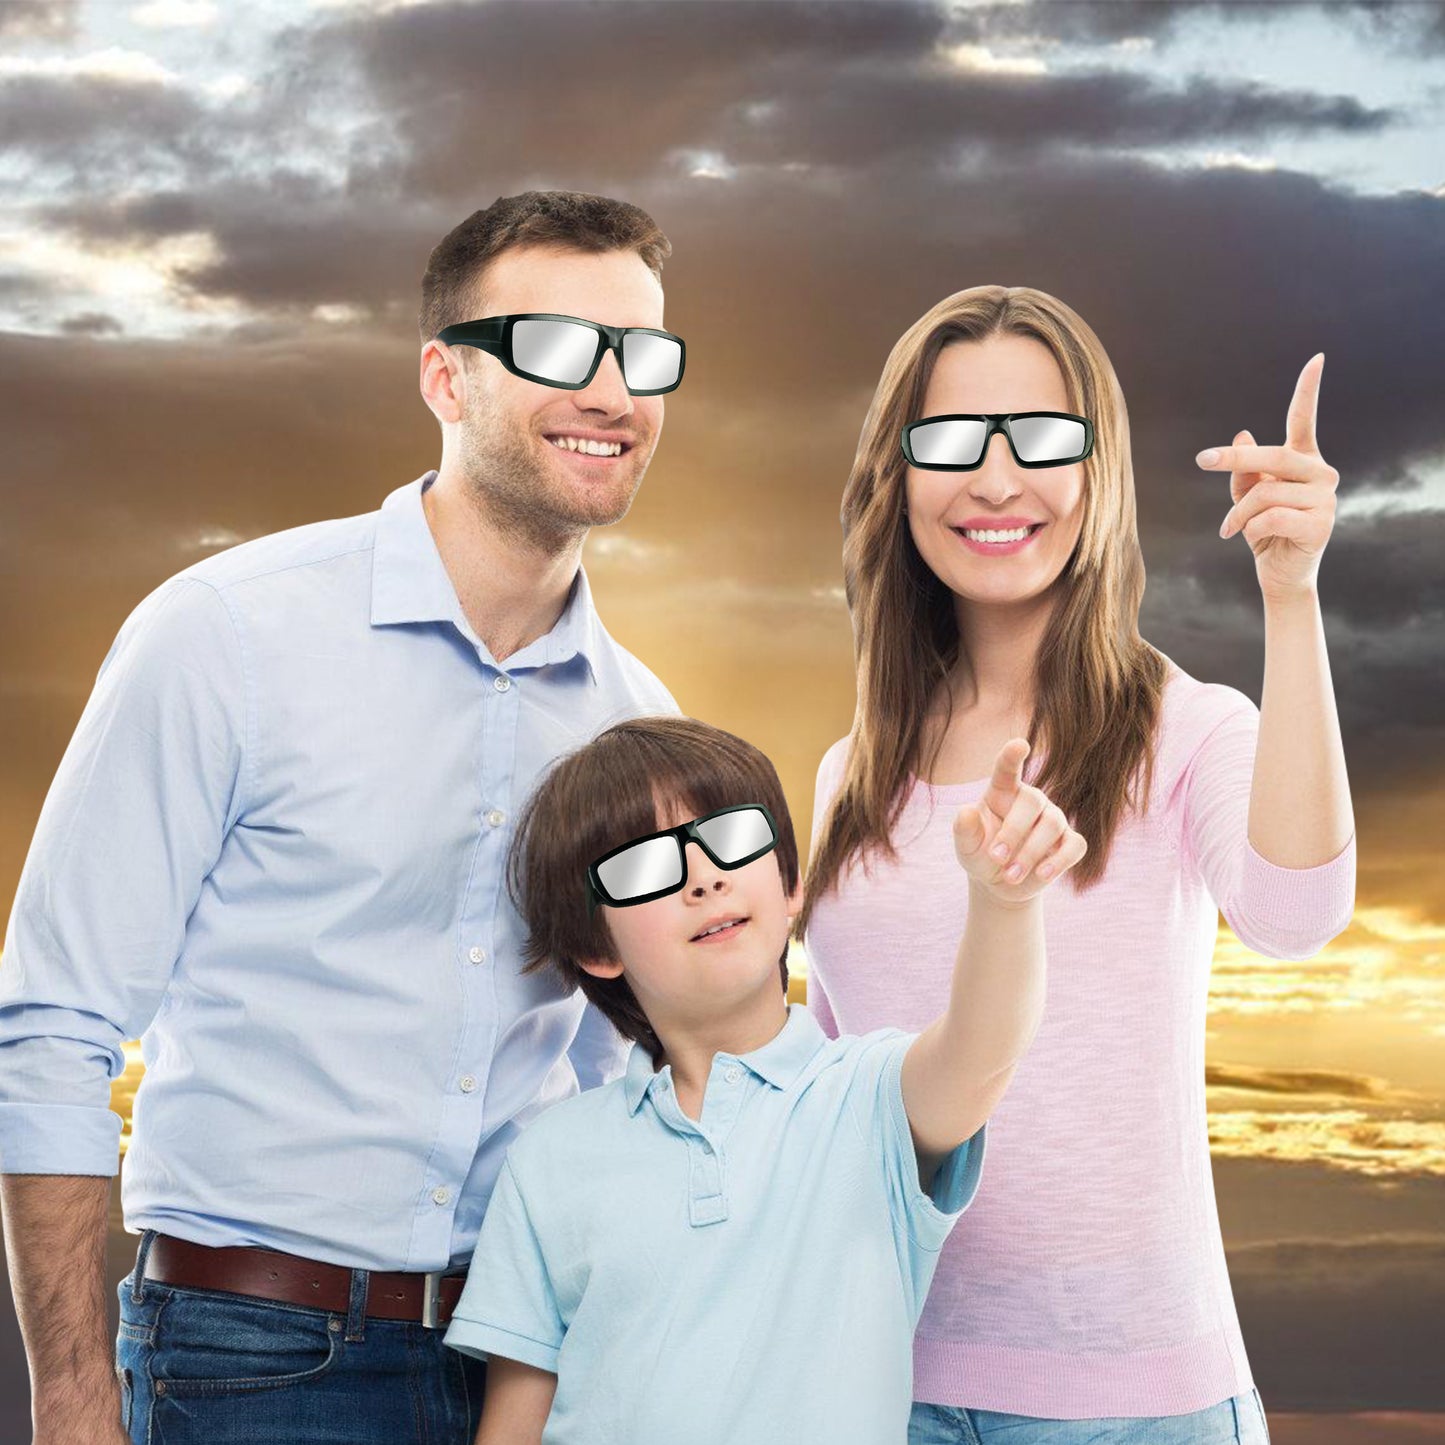 Biniki Solar Eclipse Glasses - ISO 12312-2:2015(E) & CE Certified, Durable Plastic Eclipse Glasses for Direct Sun Viewing